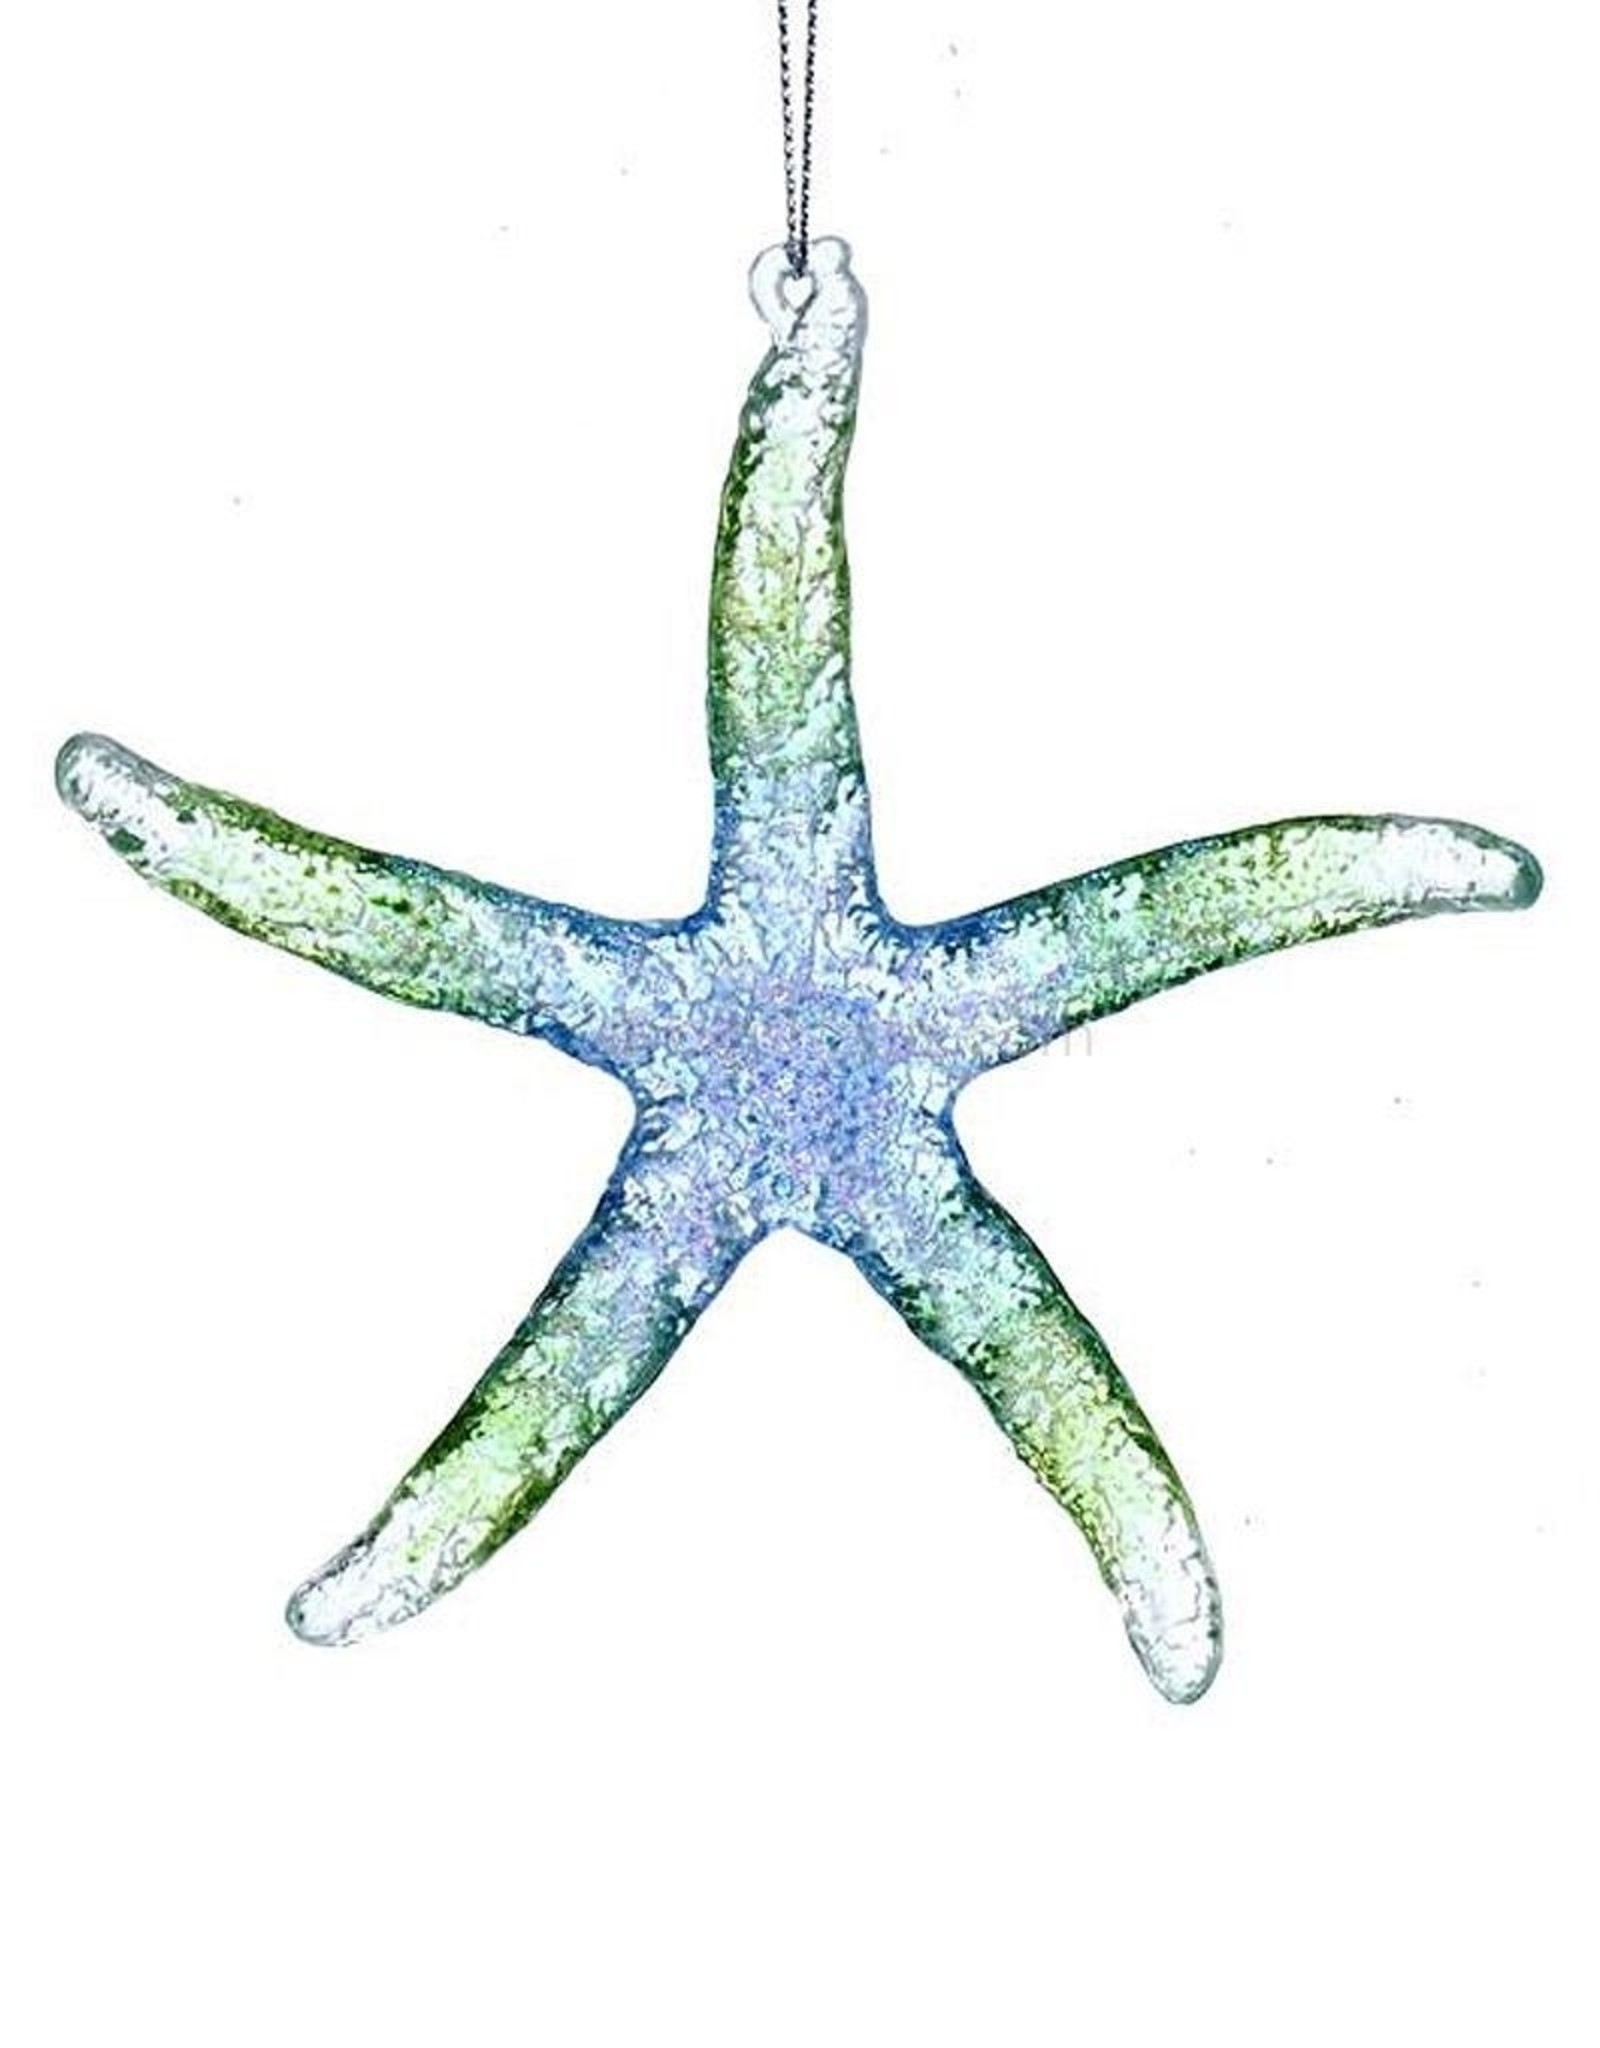 Kurt Adler Acrylic Glitter Starfish Ornament Translucent Blue Green